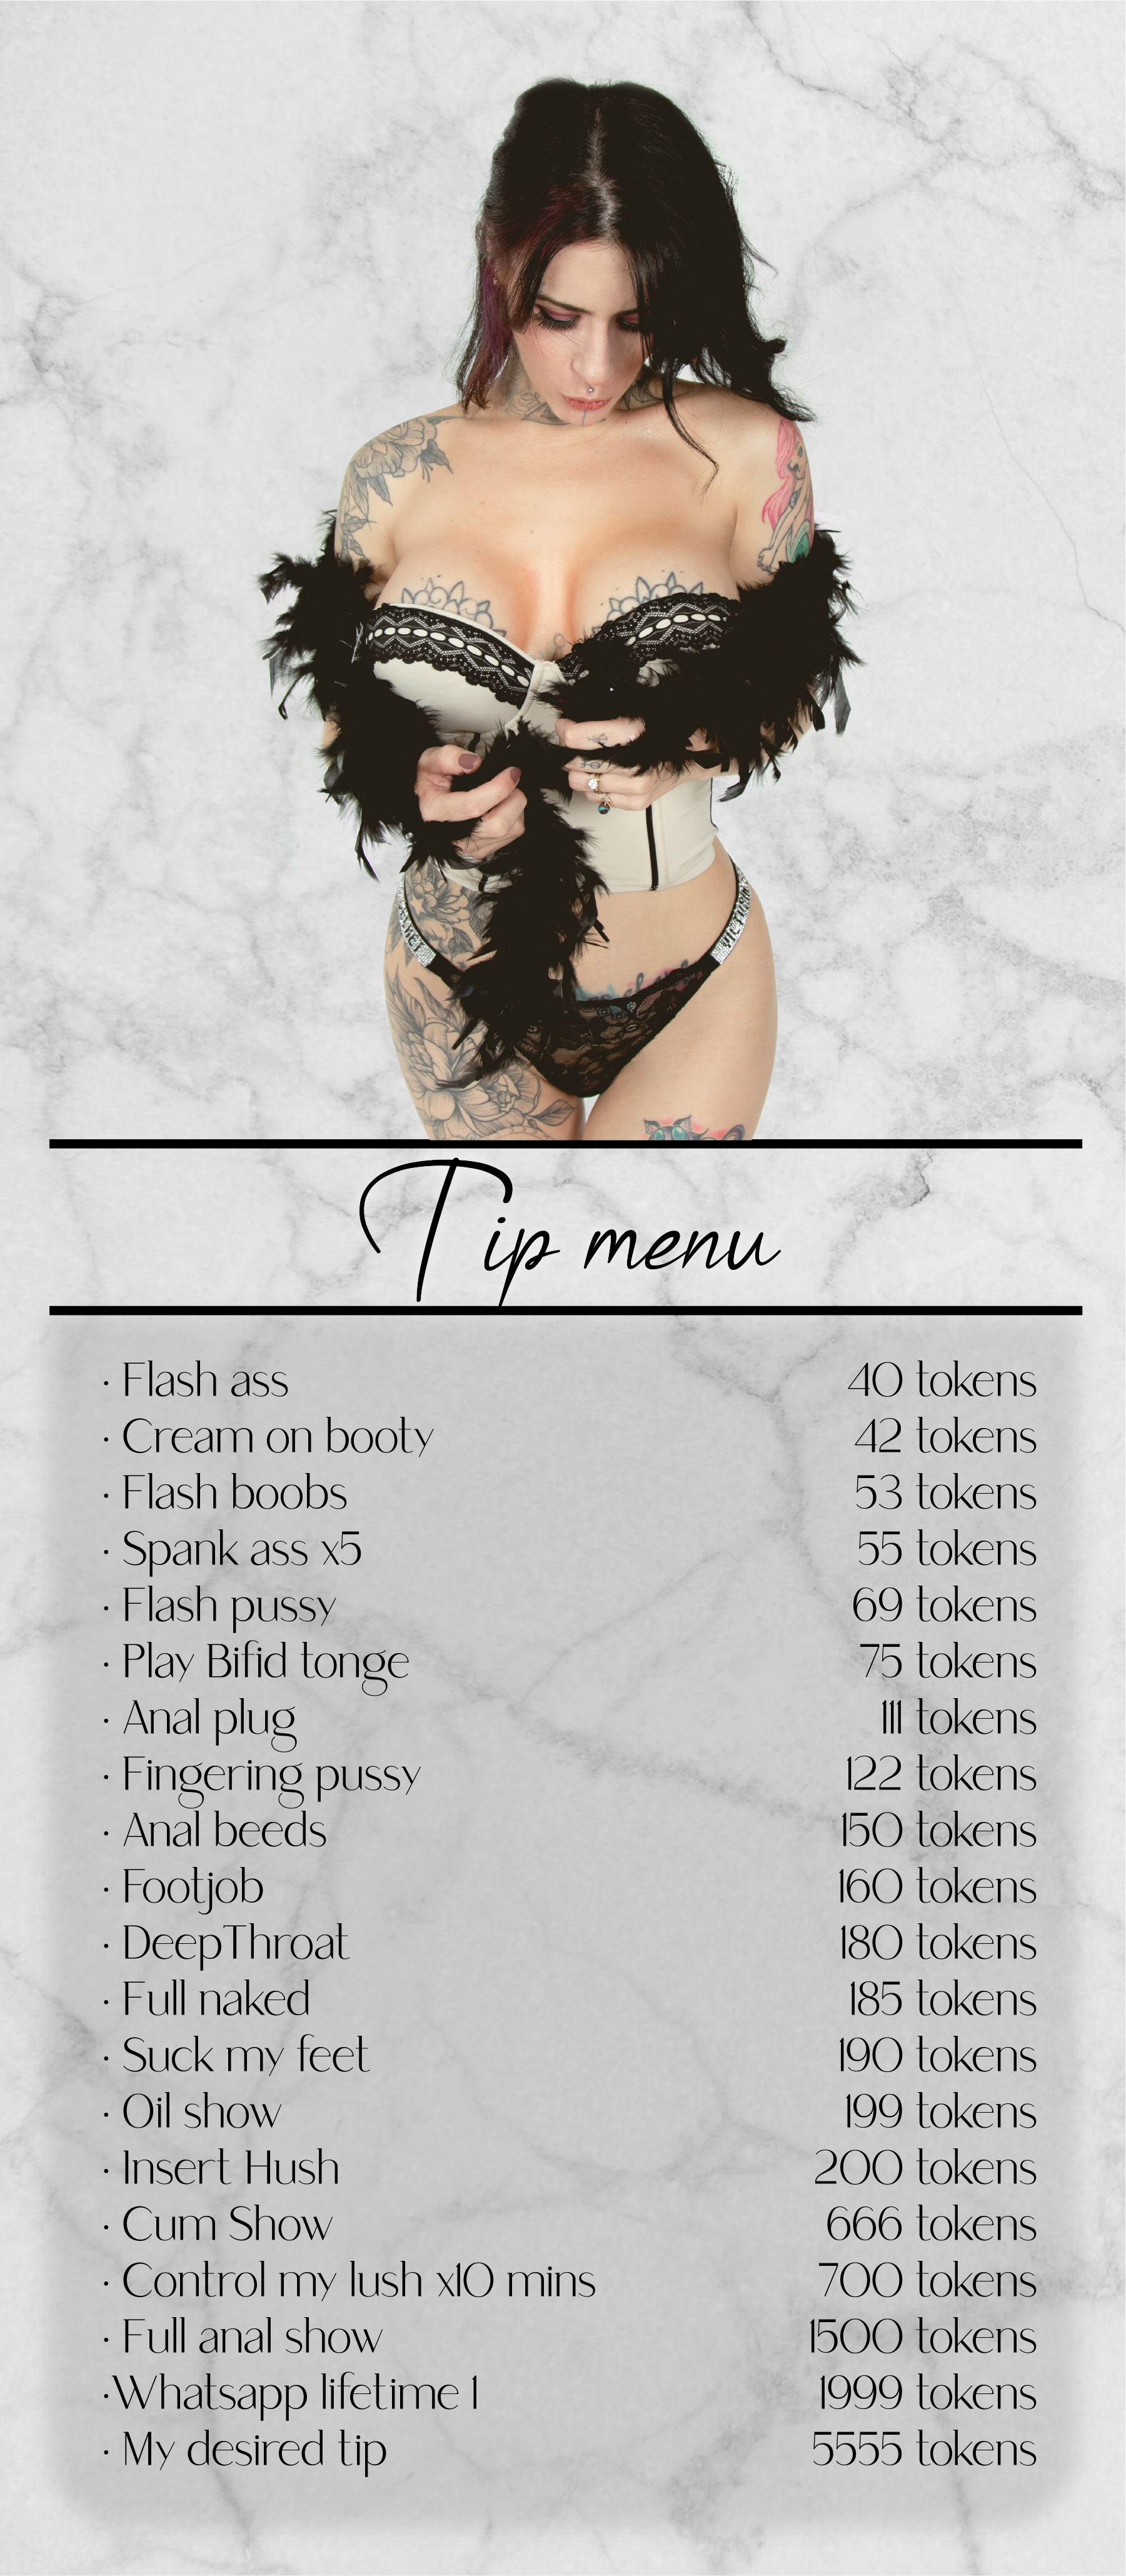 NicolleClaire tip menu image: 1